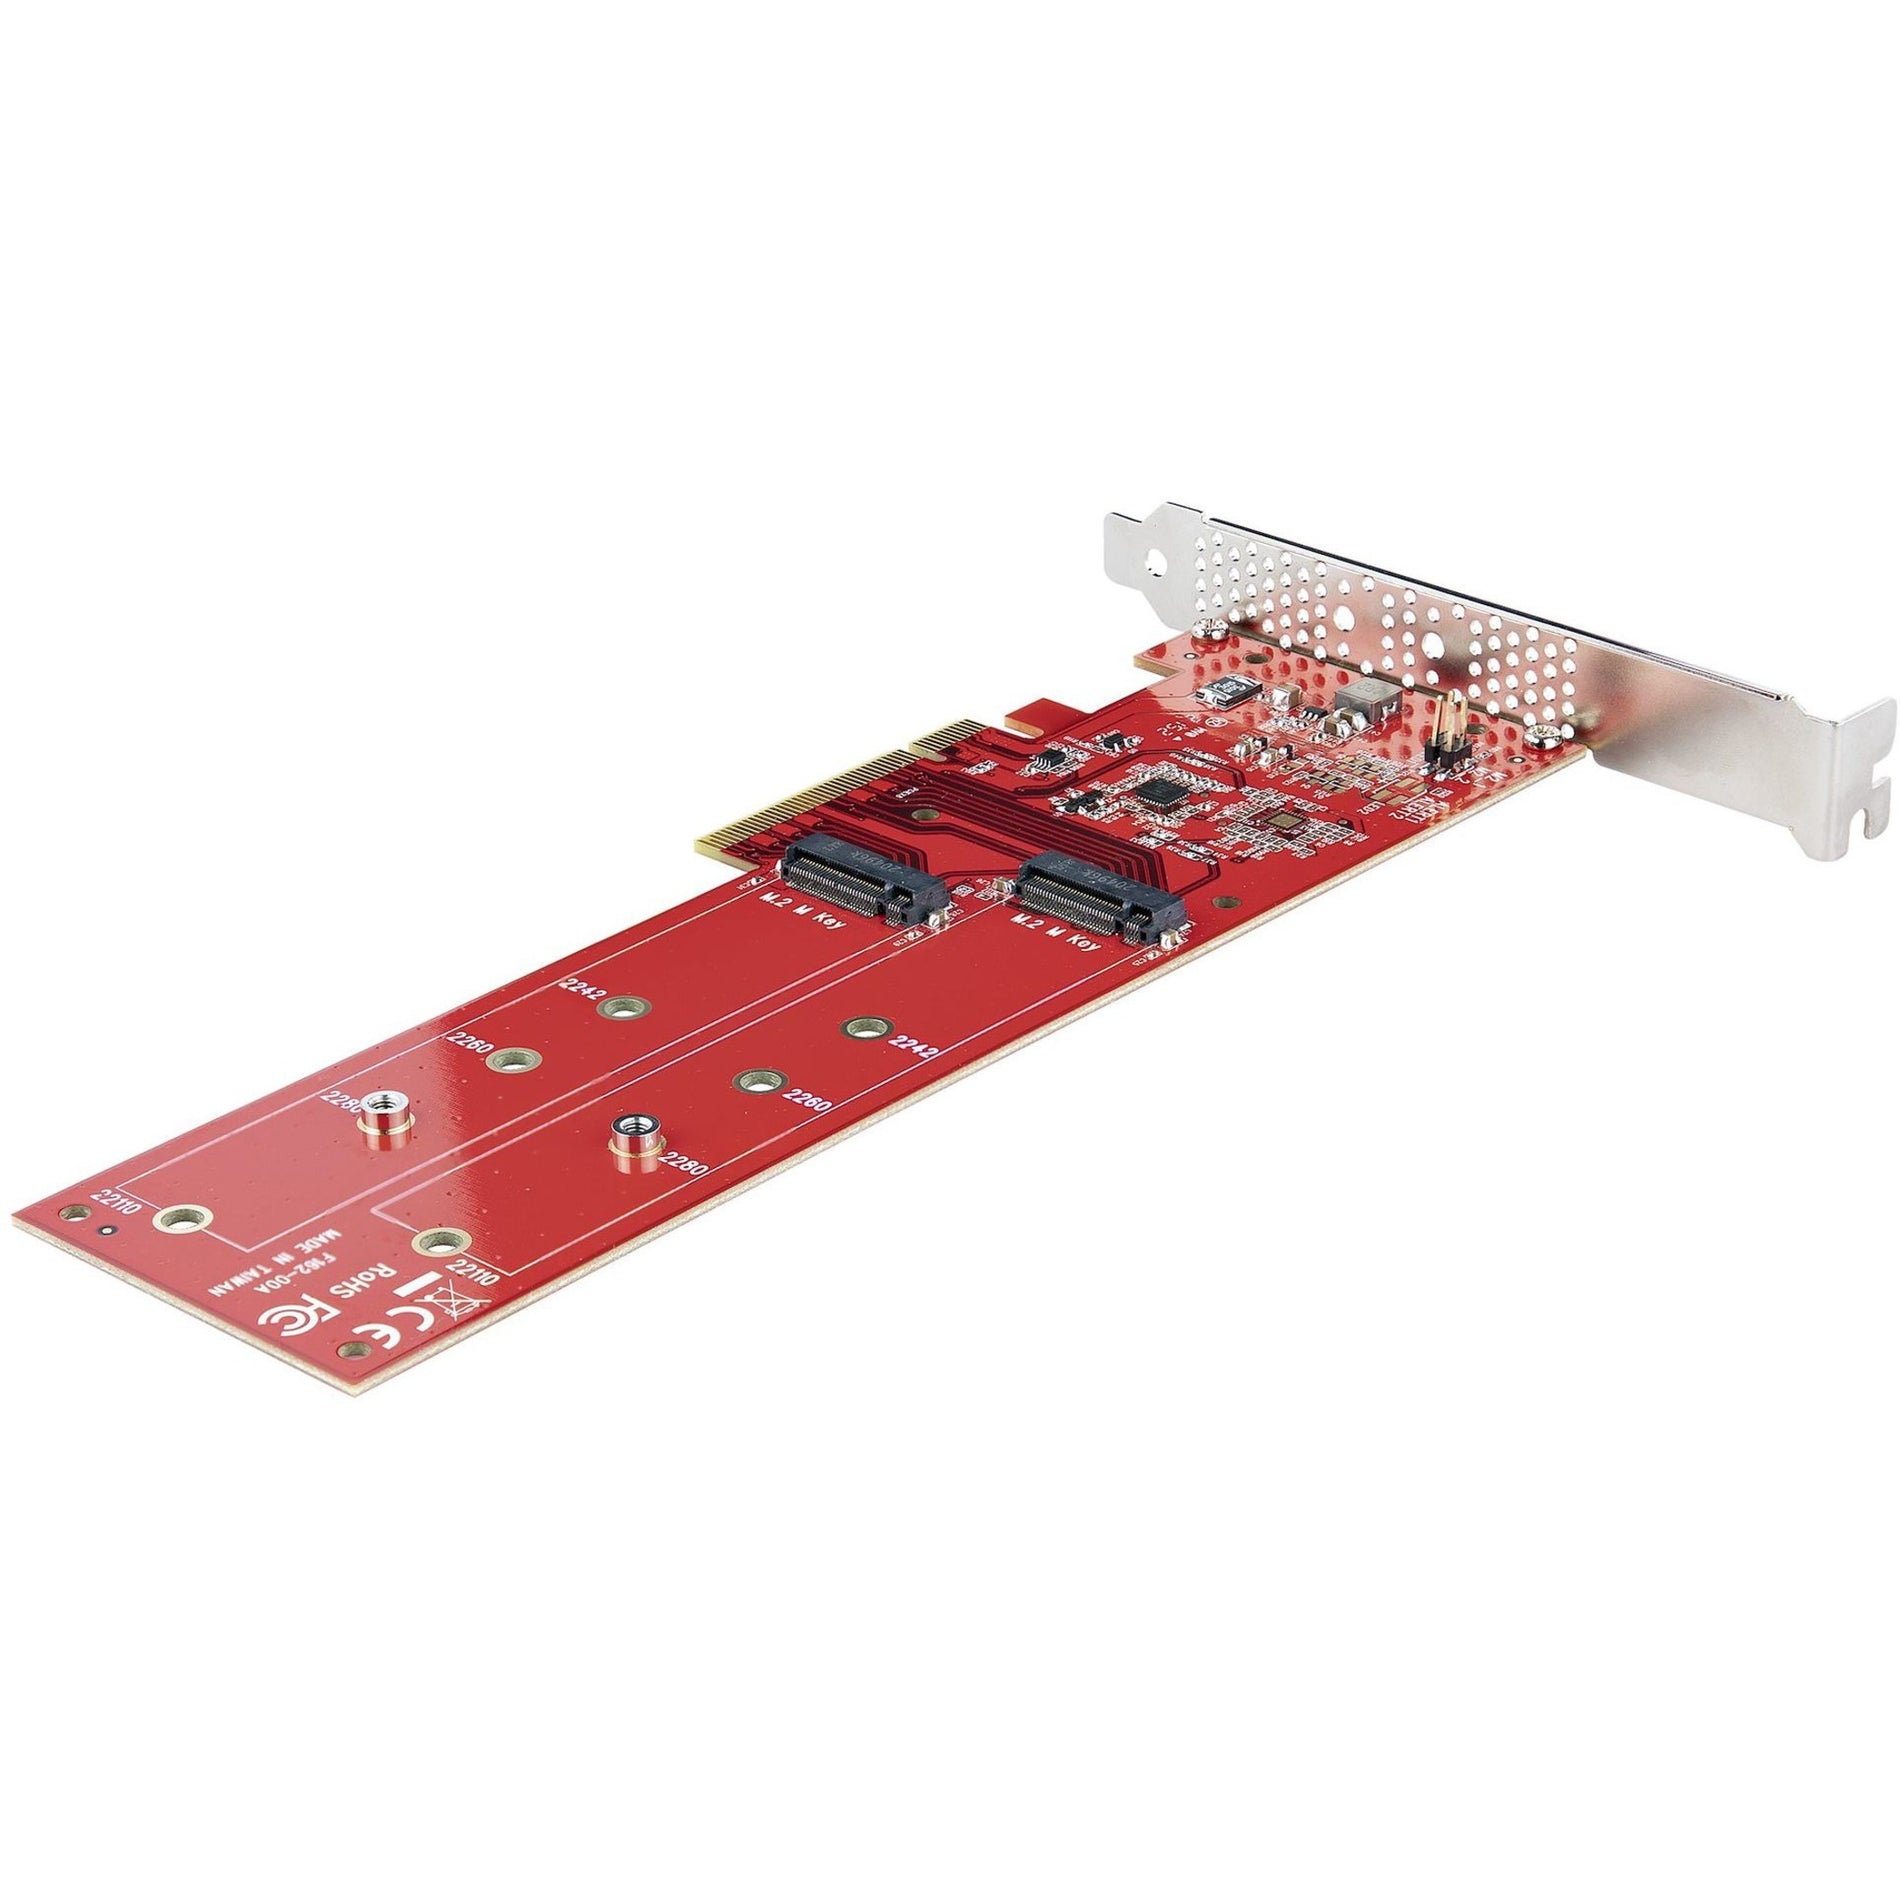 StarTech.com 启达科技  PCIe PCIe  M.2 M.2  Adapter Card 适配卡  Dual 双  NVMe NVMe  AHCI AHCI  SSD 固态硬盘  PCI Express PCI Express  Bifurcation 分流